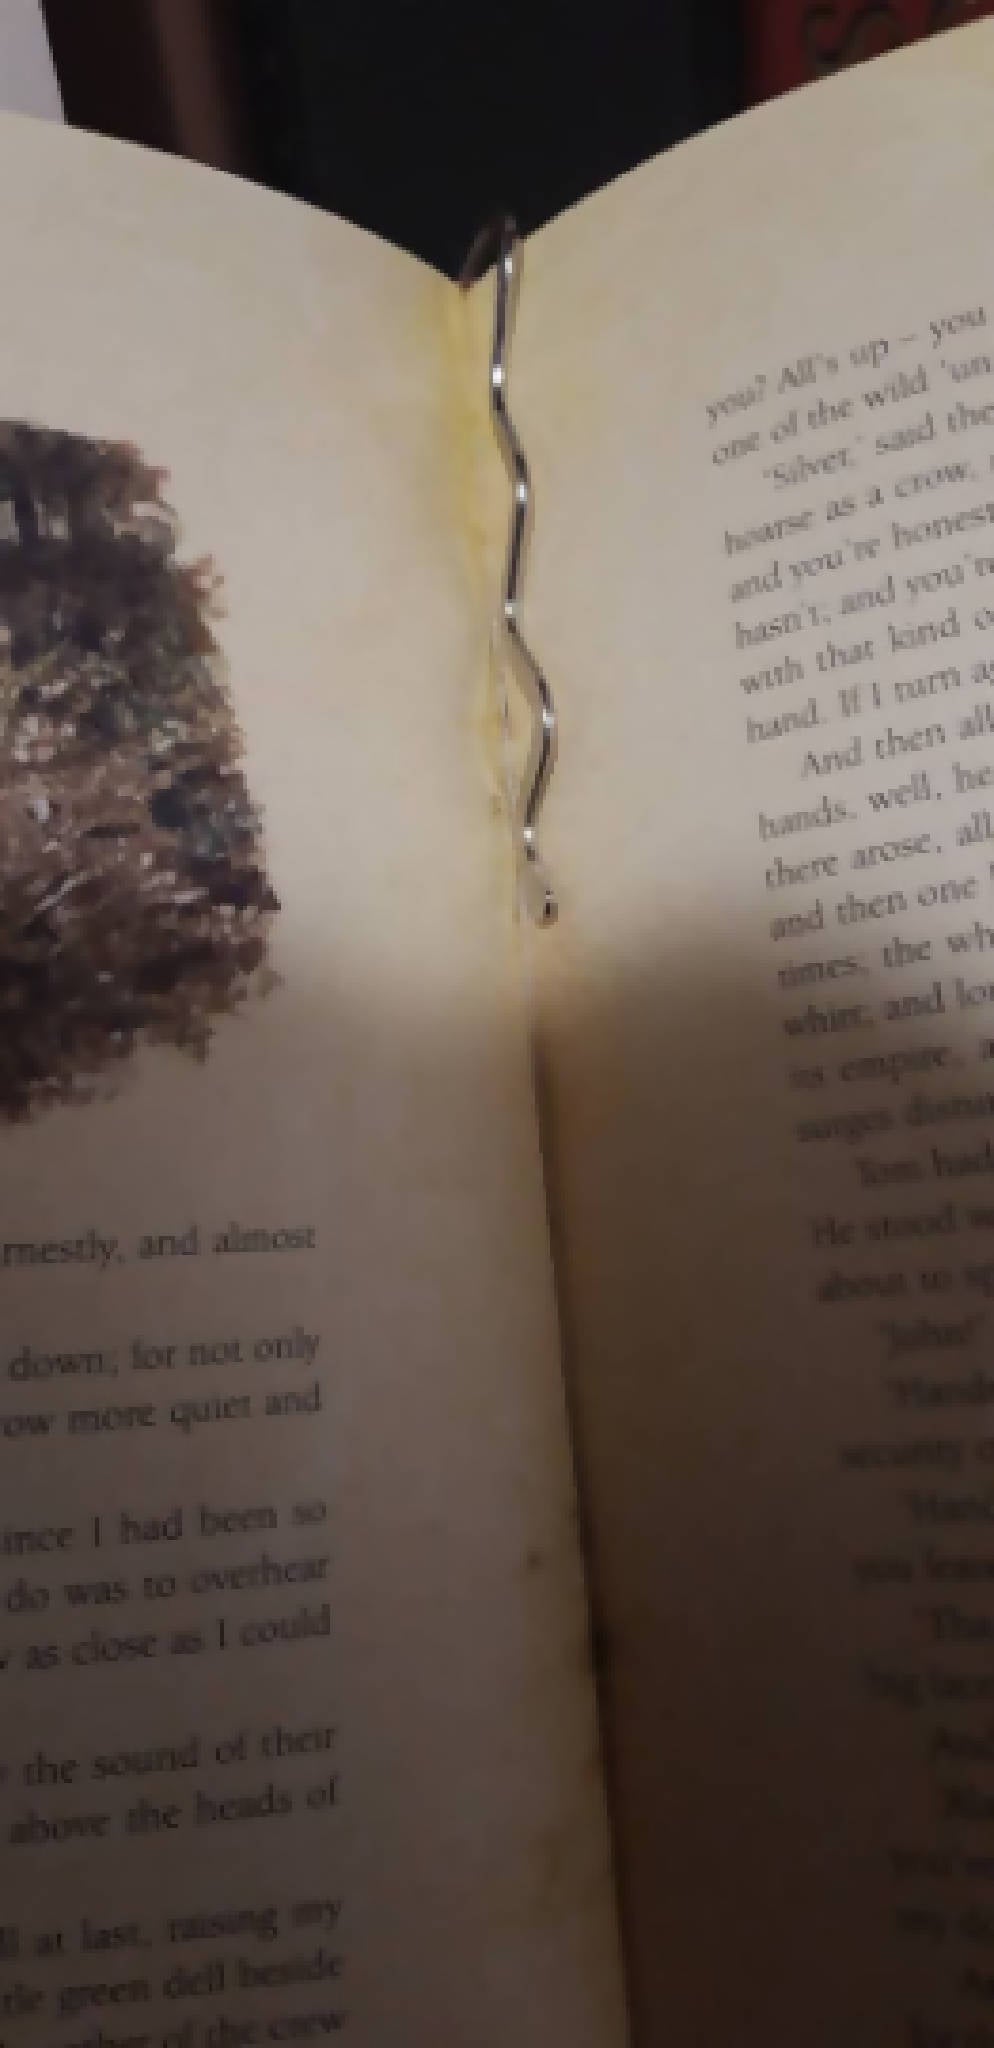 "Read" bookmark